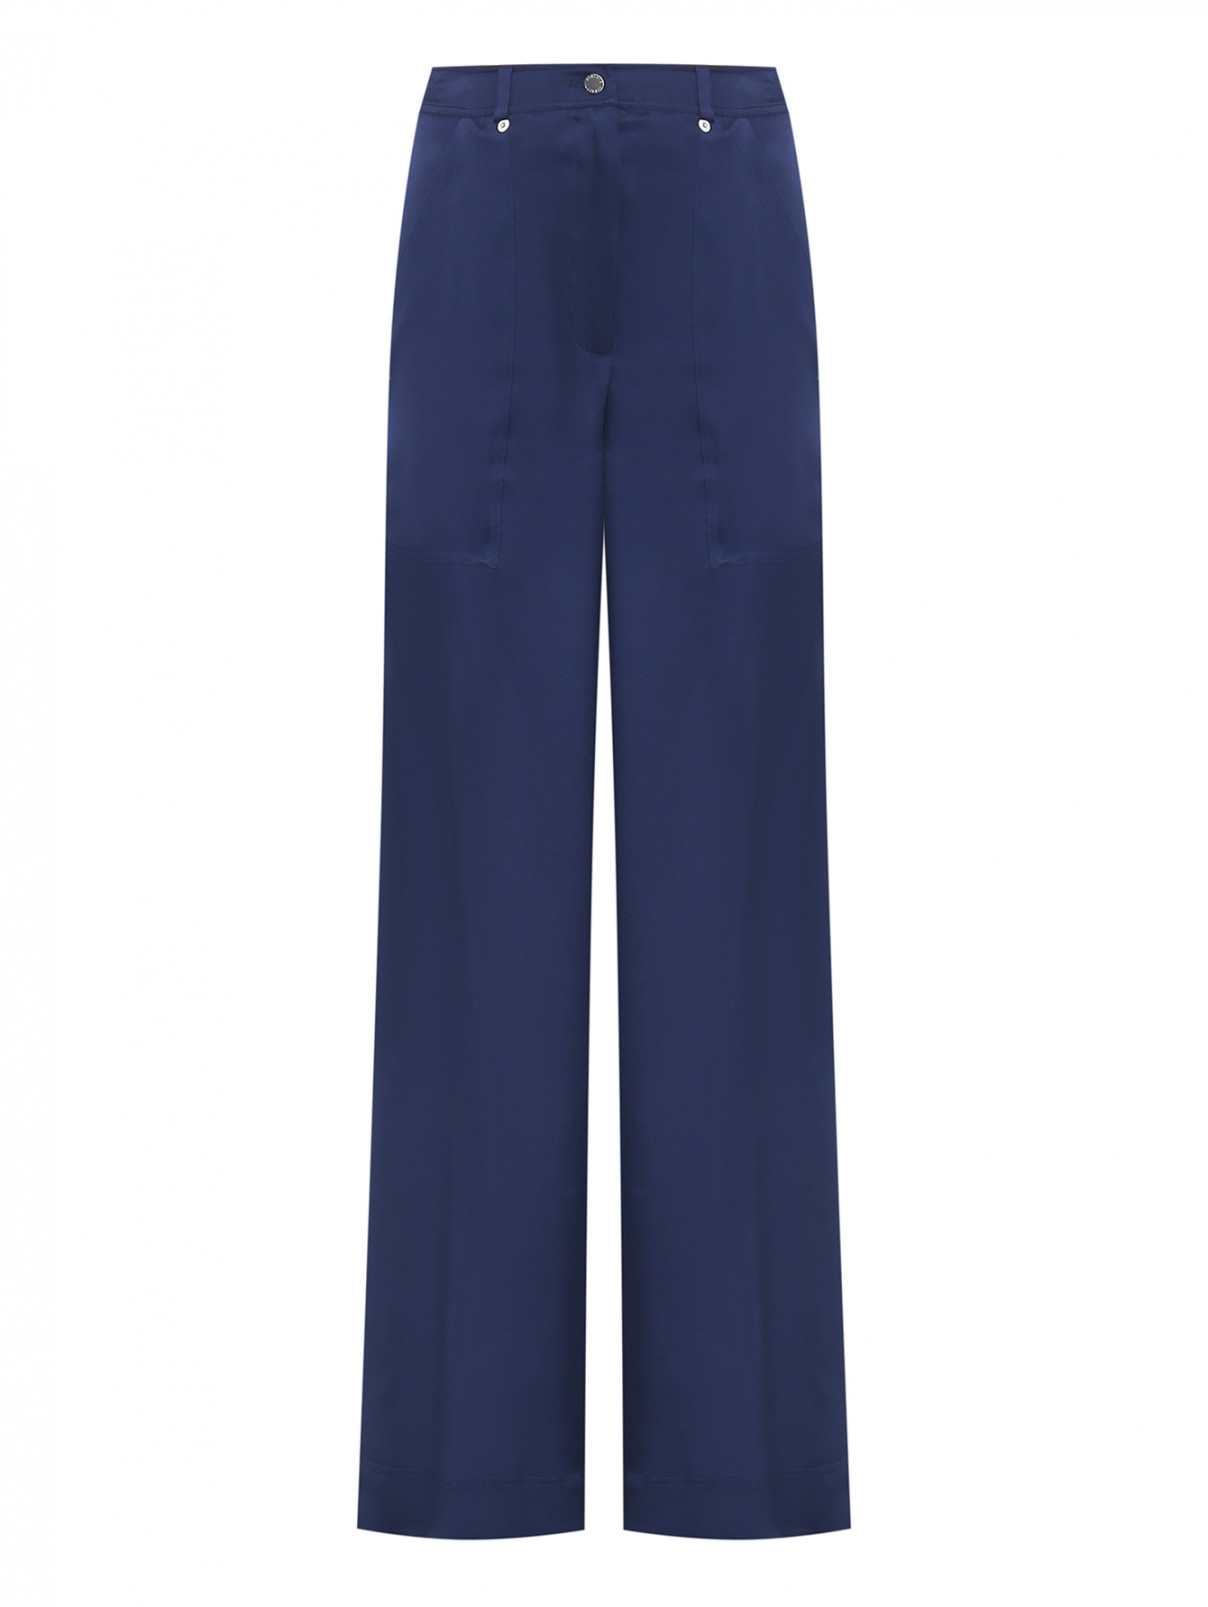 Широкие брюки с карманами Alberta Ferretti  –  Общий вид  – Цвет:  Синий